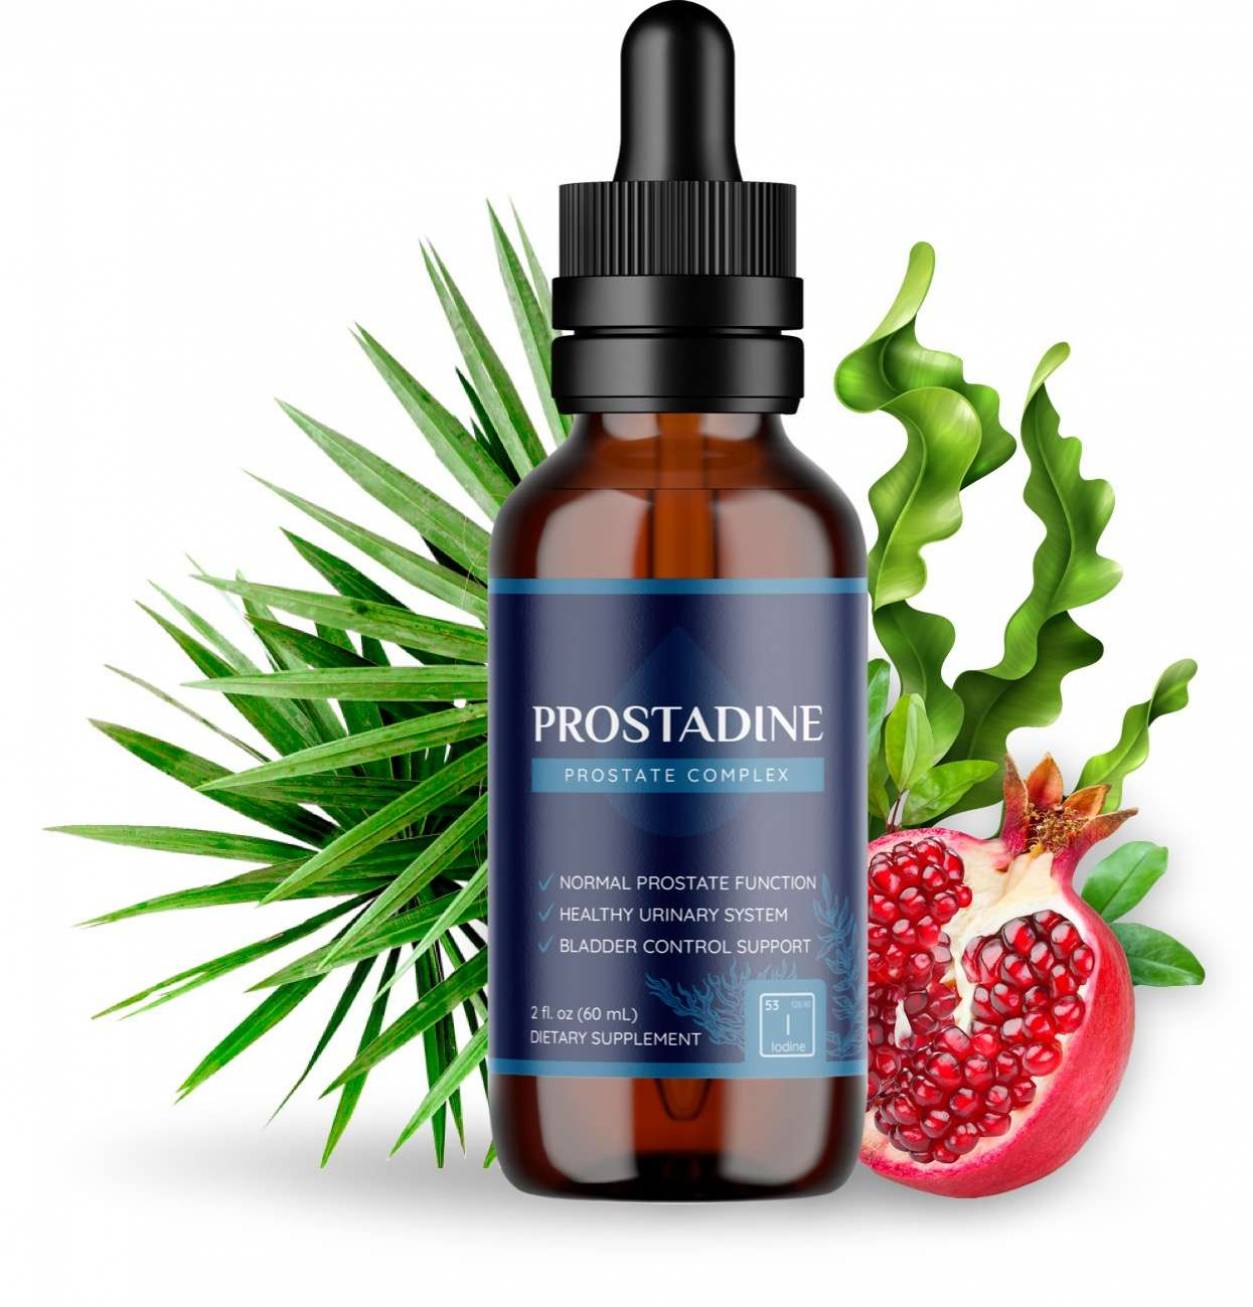 Prostadine Ingredients Review